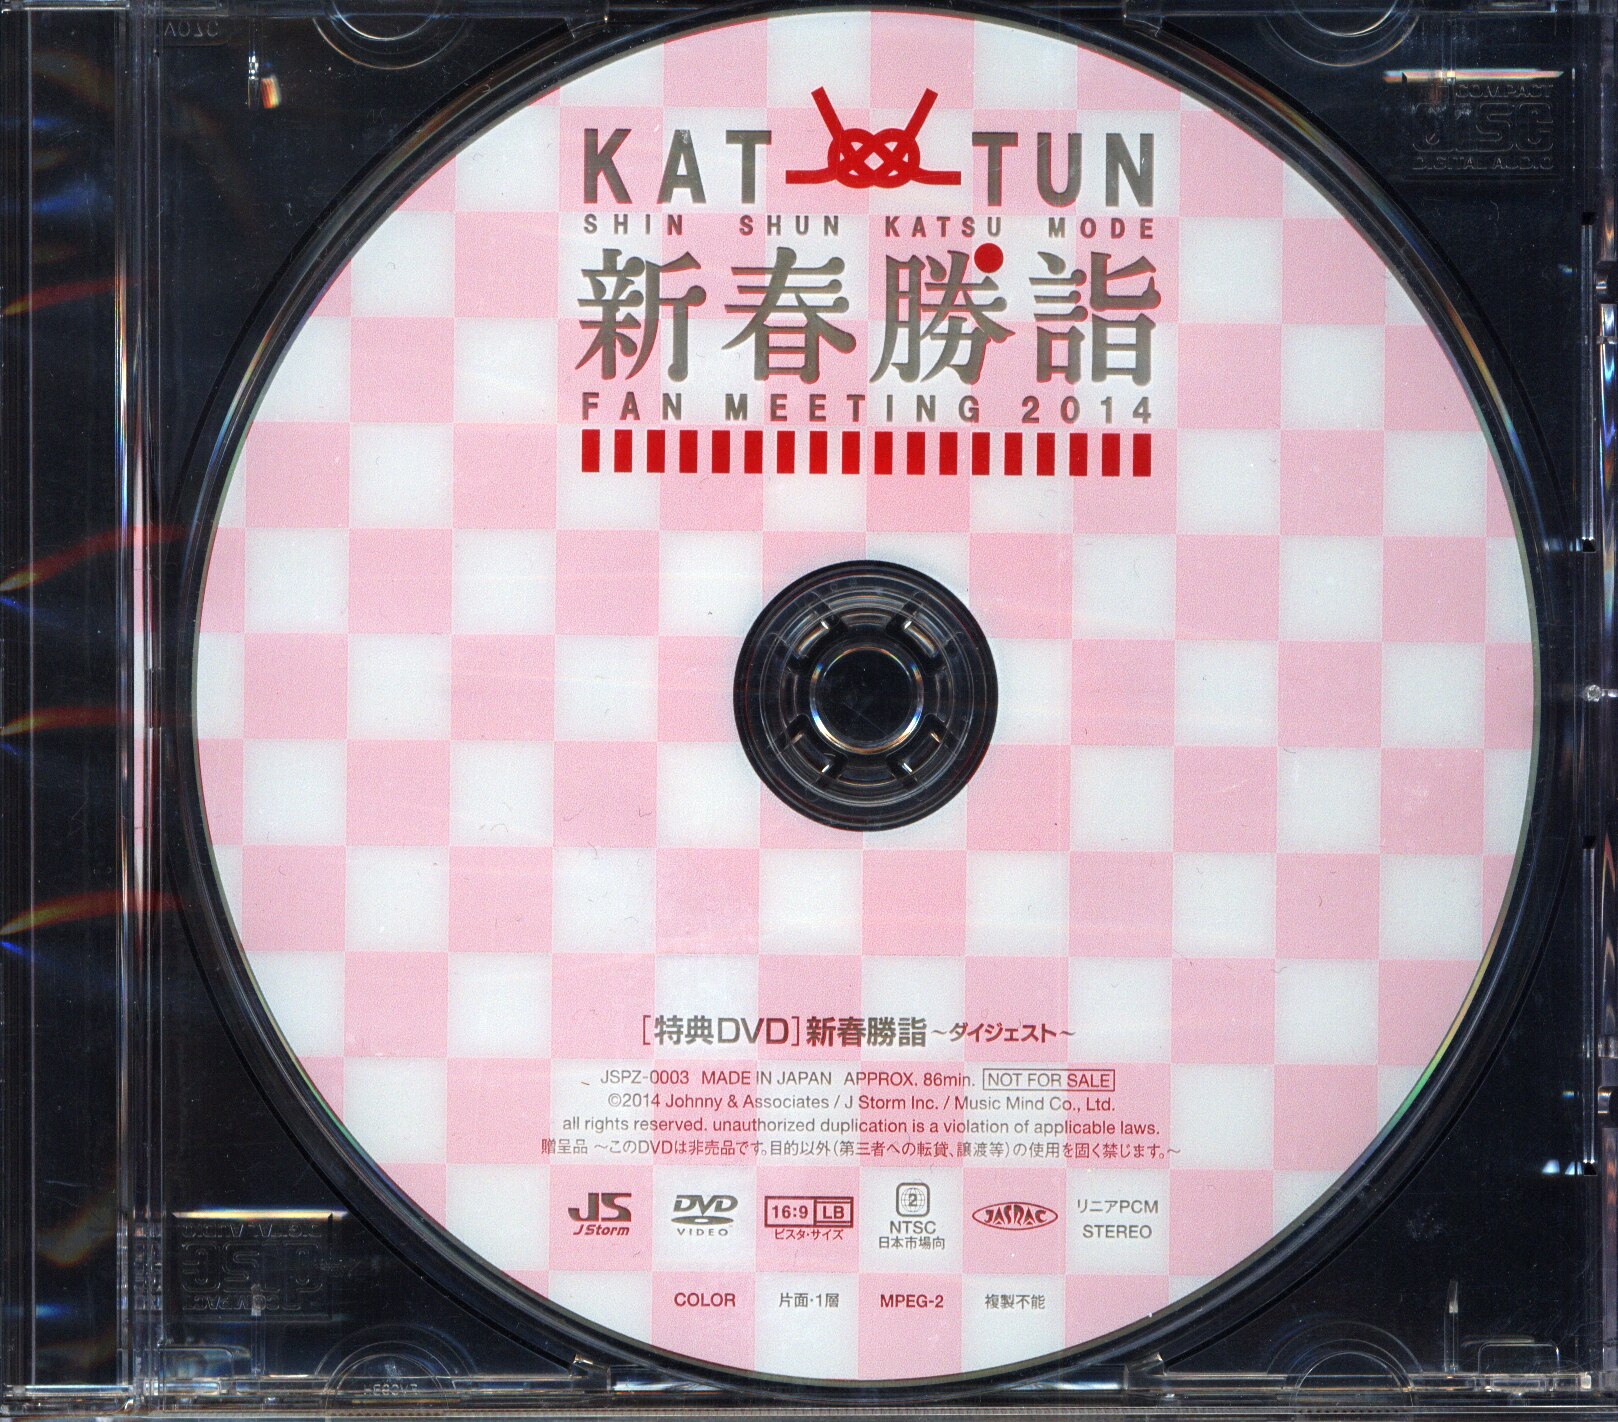 KATーTUN 新春勝詣 FAN MEETING 2014 ダイジェストDVD - ミュージック